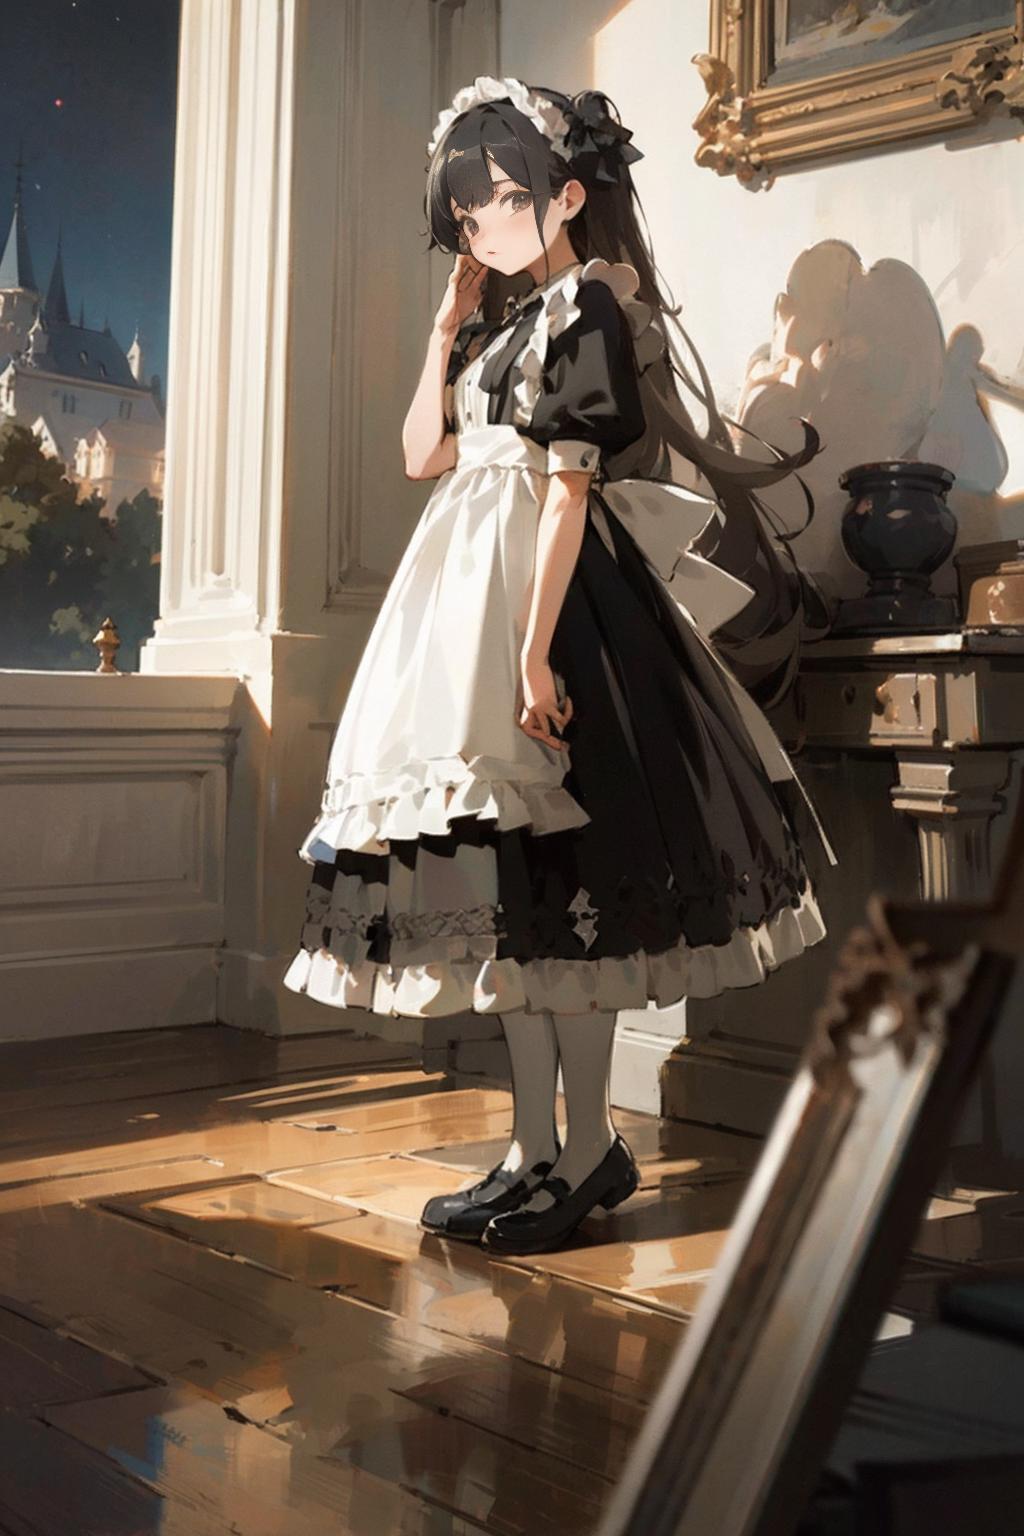 Maid costume | 女仆装 image by cyberAngel_